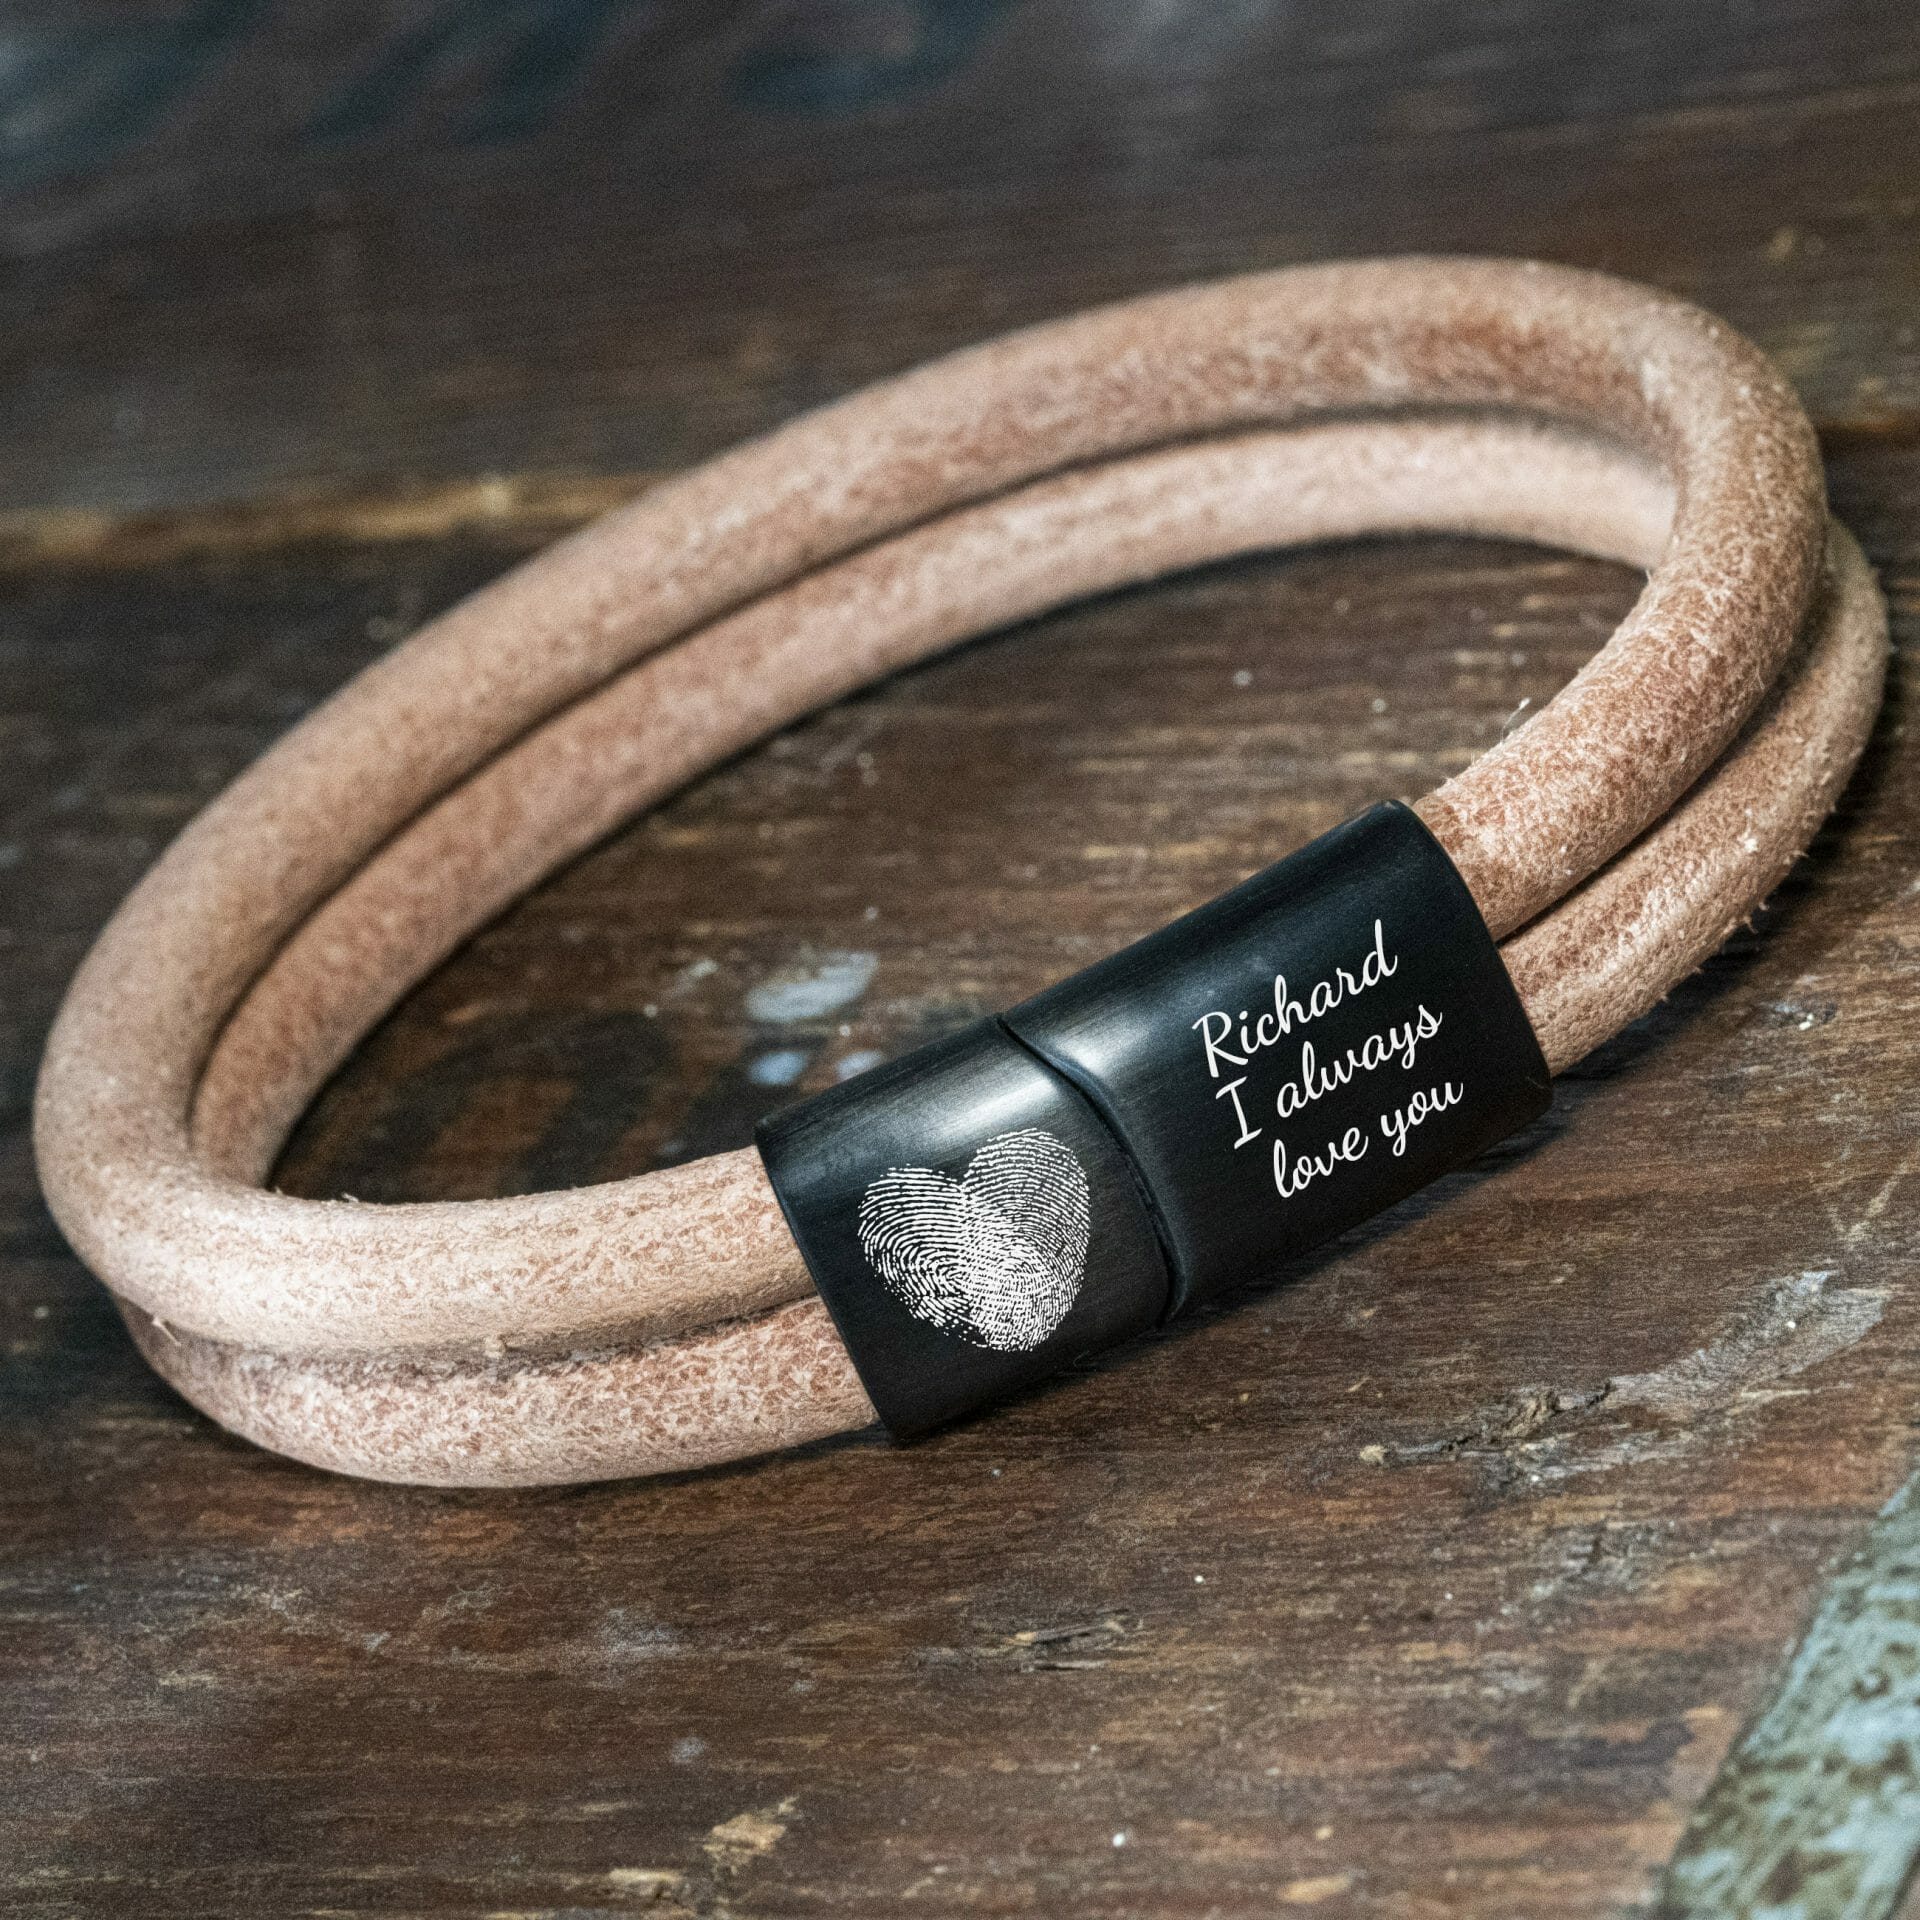 Double light leather bracelet with Fingerprint Heart engraving